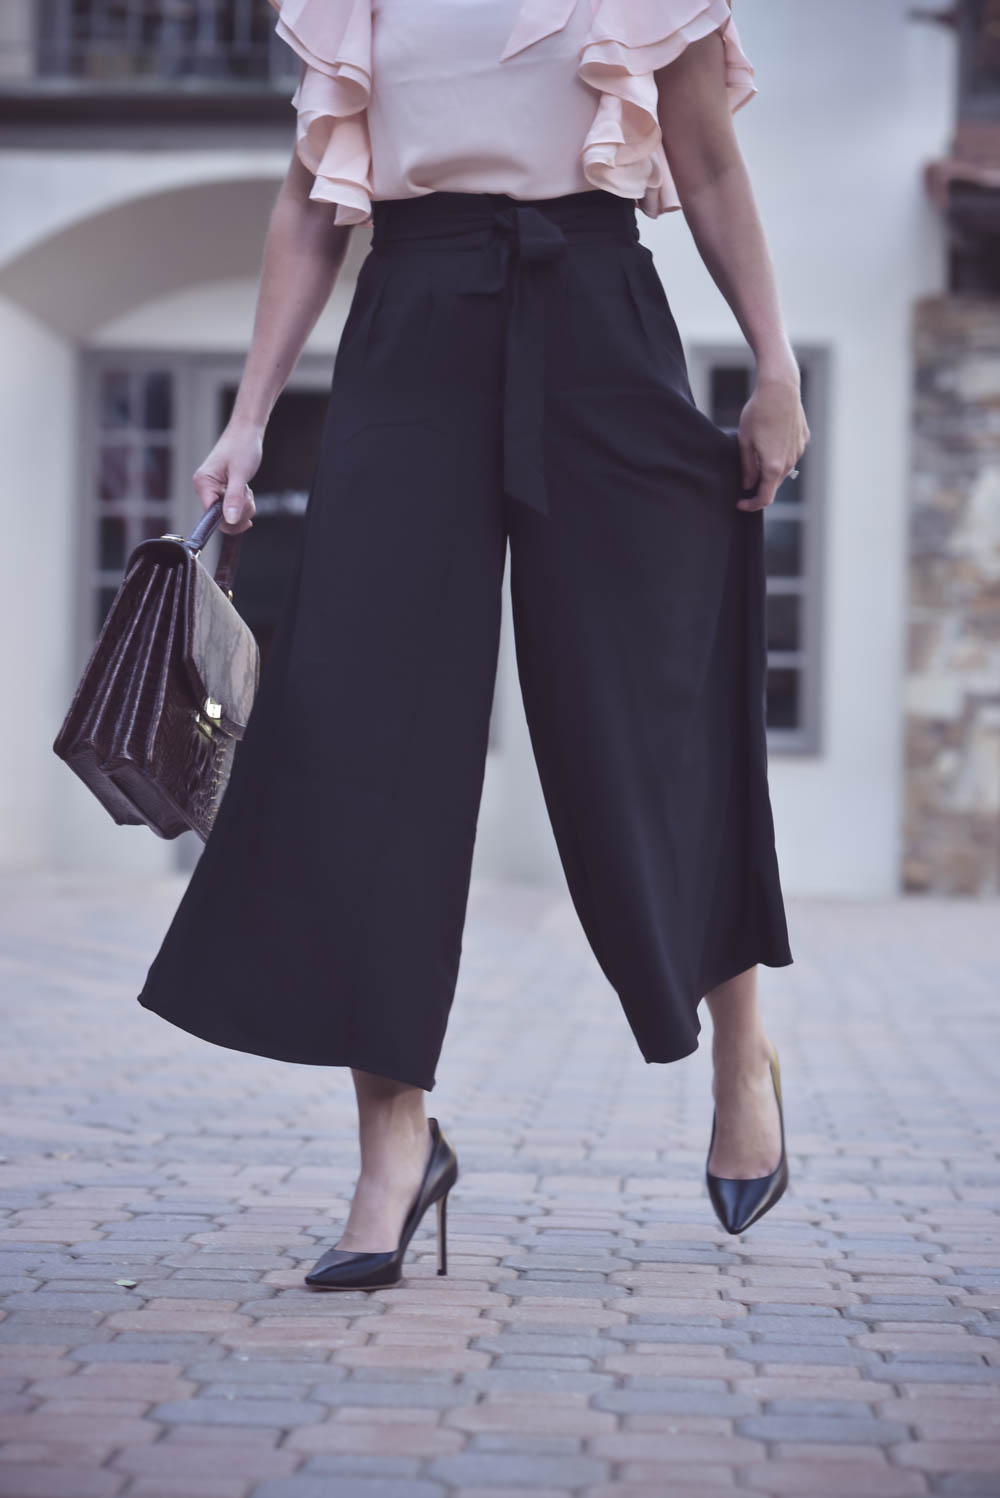 Business casual outfit idea, culottes, fashion over 40